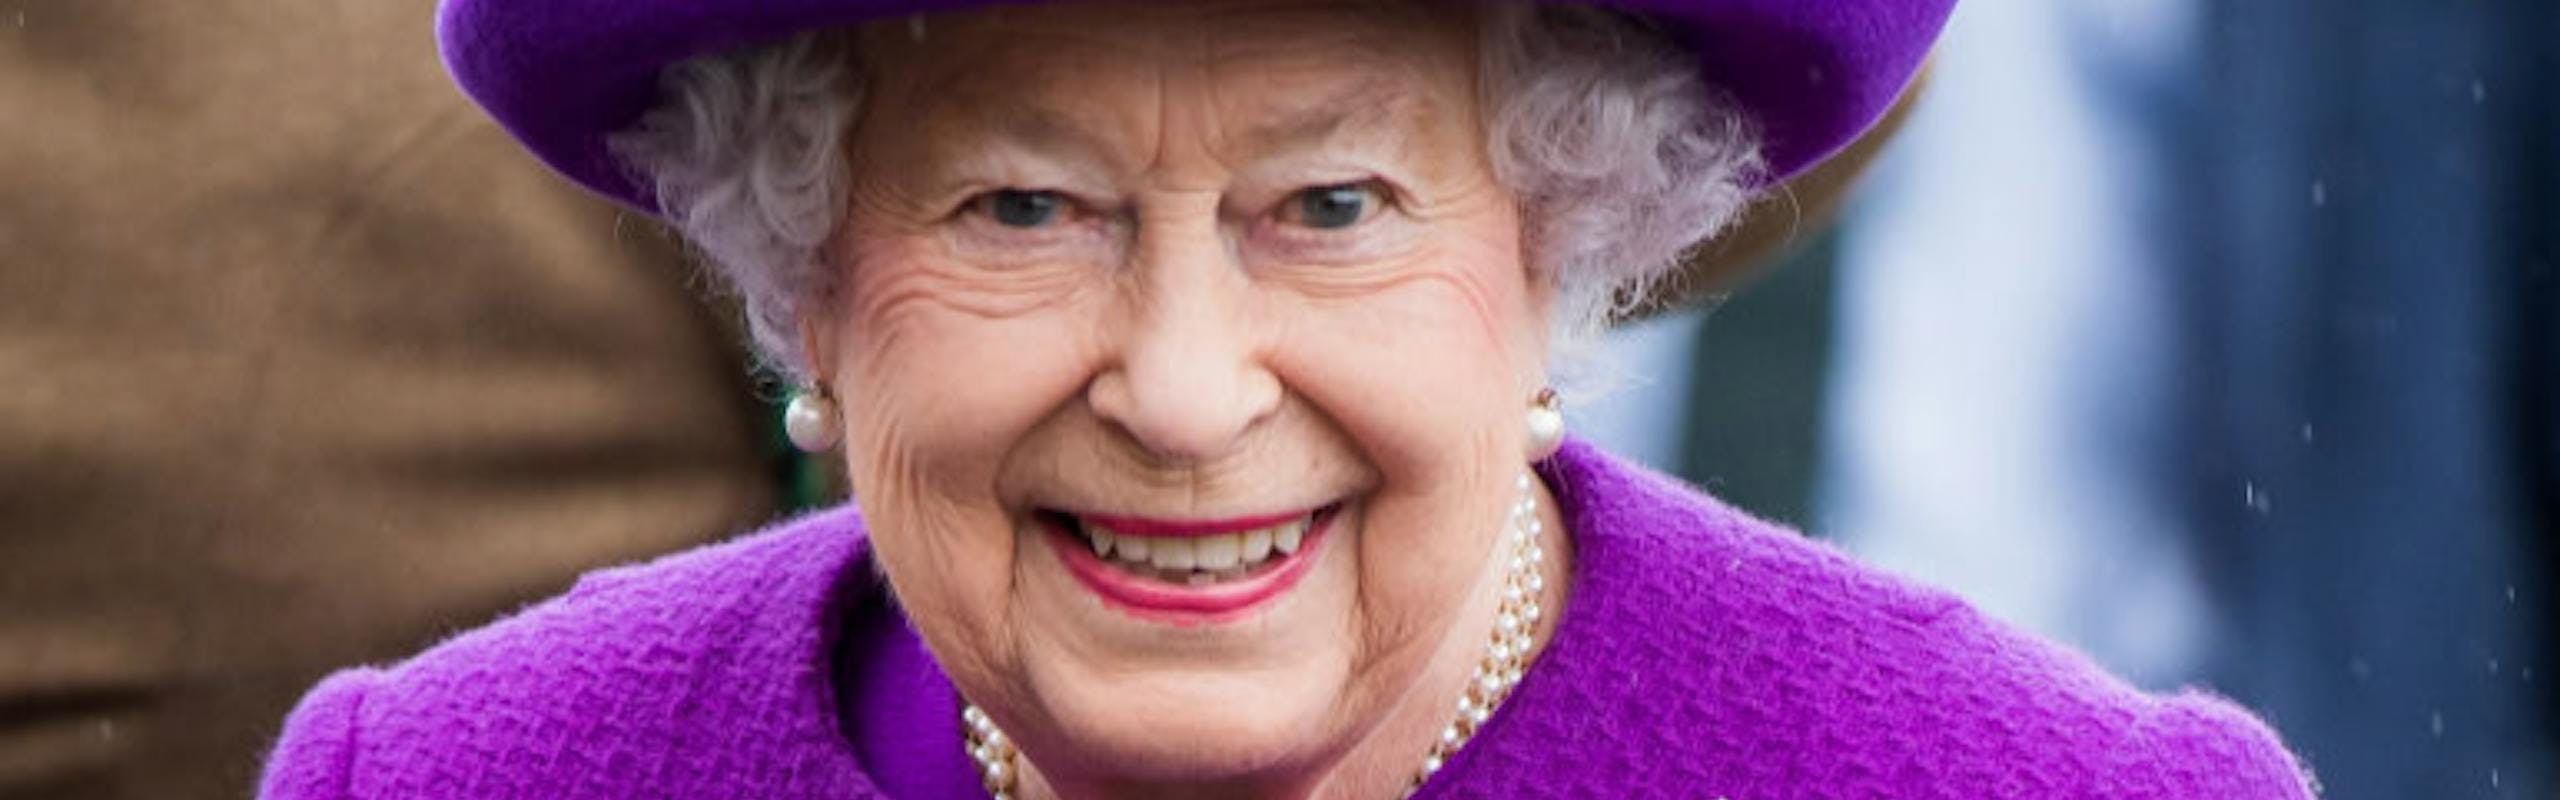 Queen Elizabeth wearing a purple suit and hat